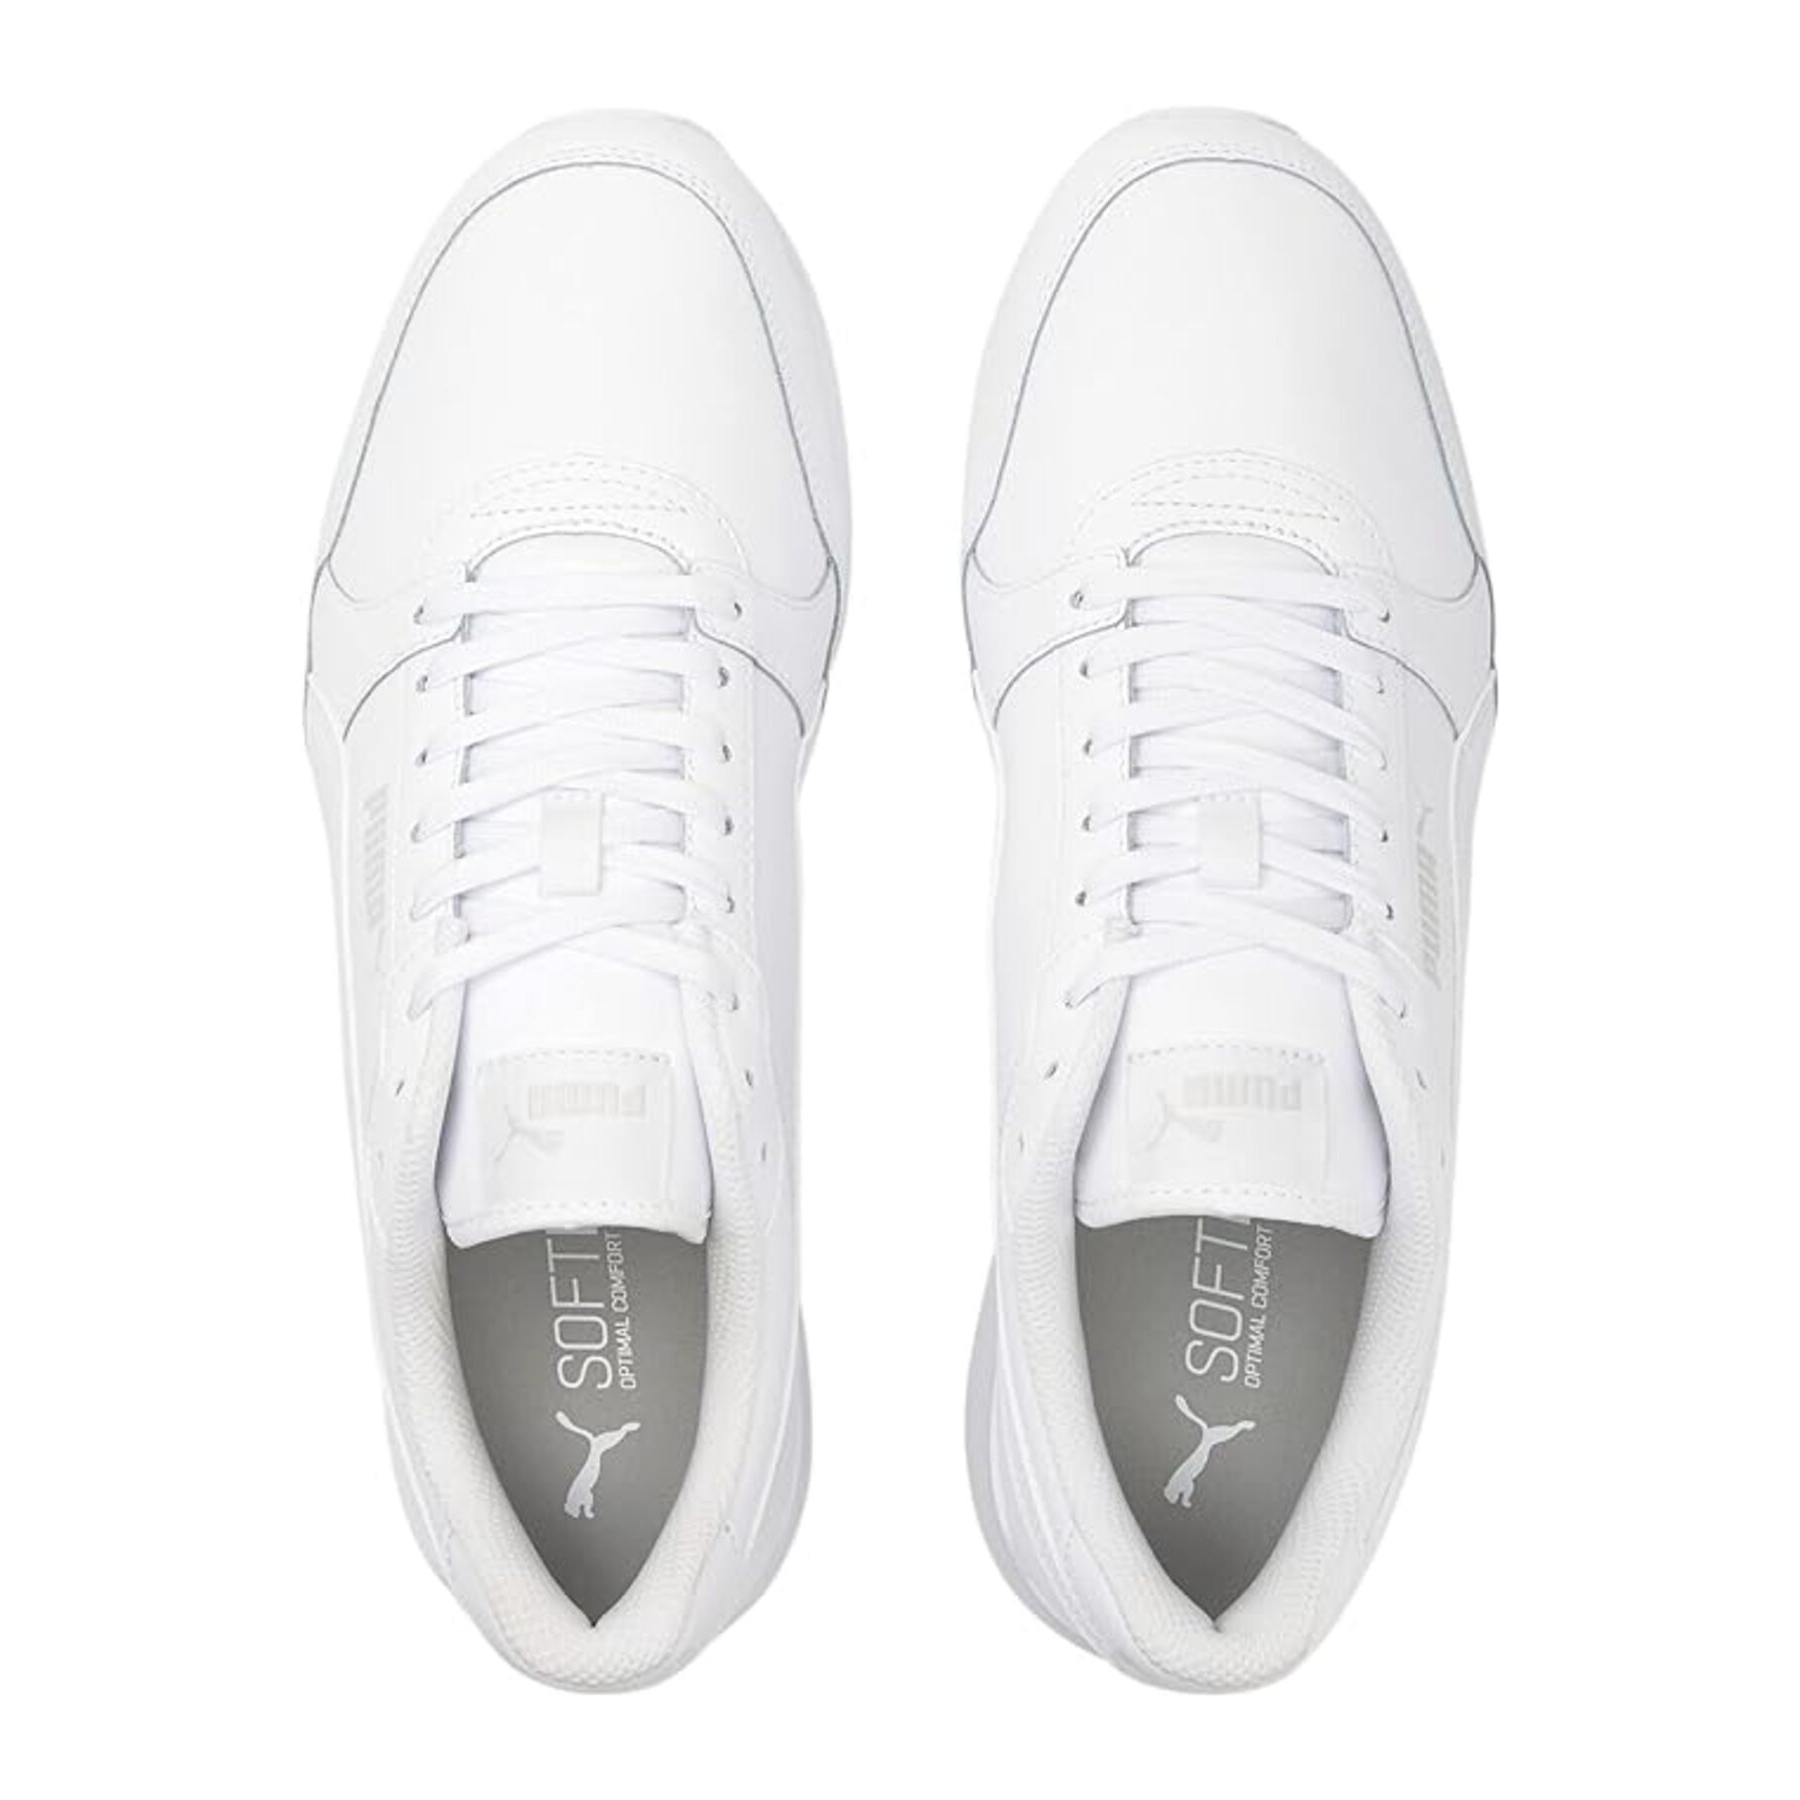 Puma Runner V3 Beyaz Spor Ayakkabı (384855-20)